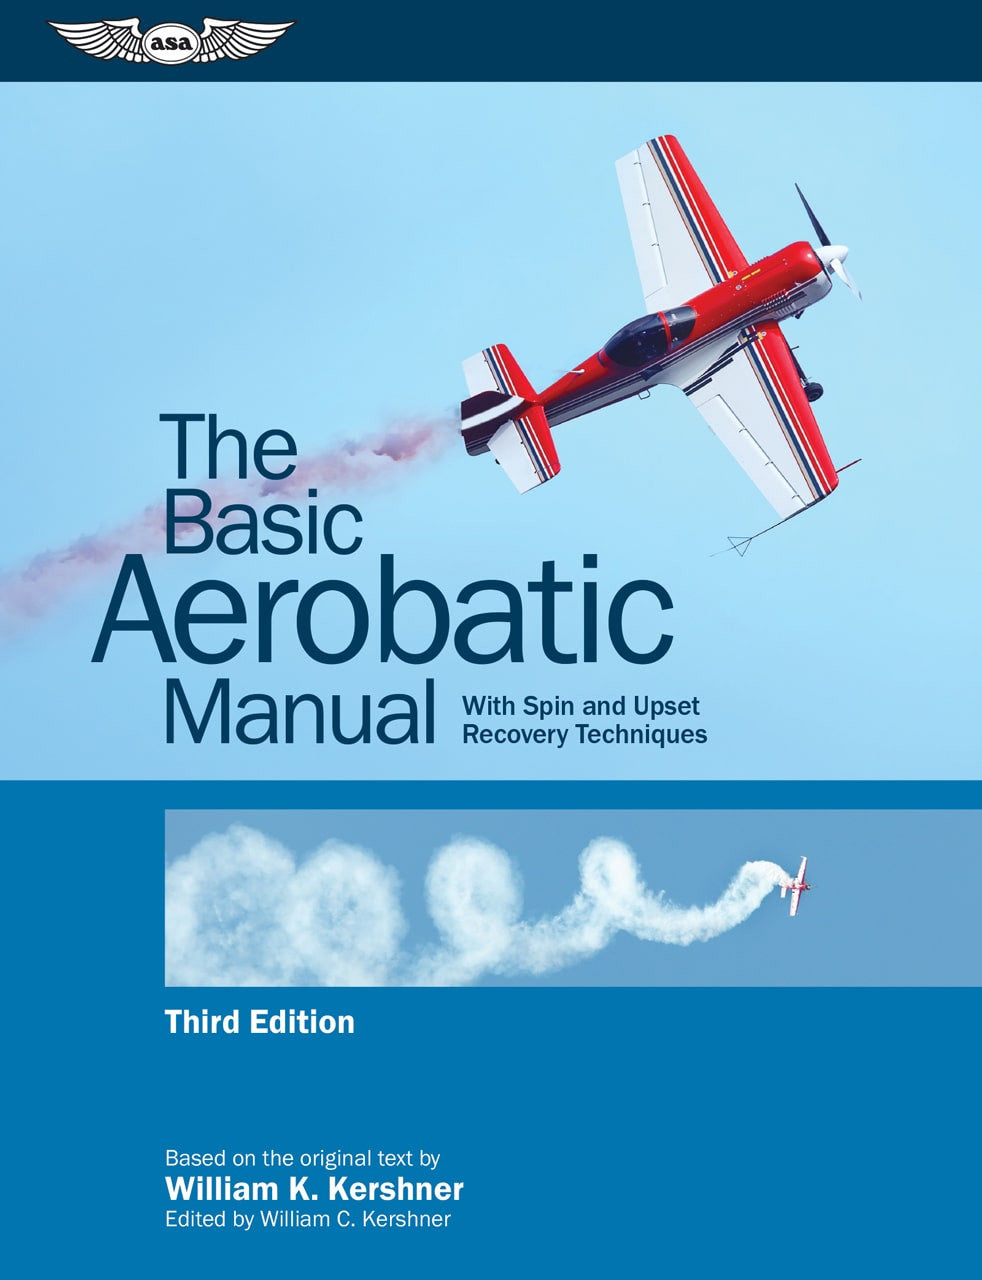 ASA The Basic Aerobatic Manual 3rd Edition